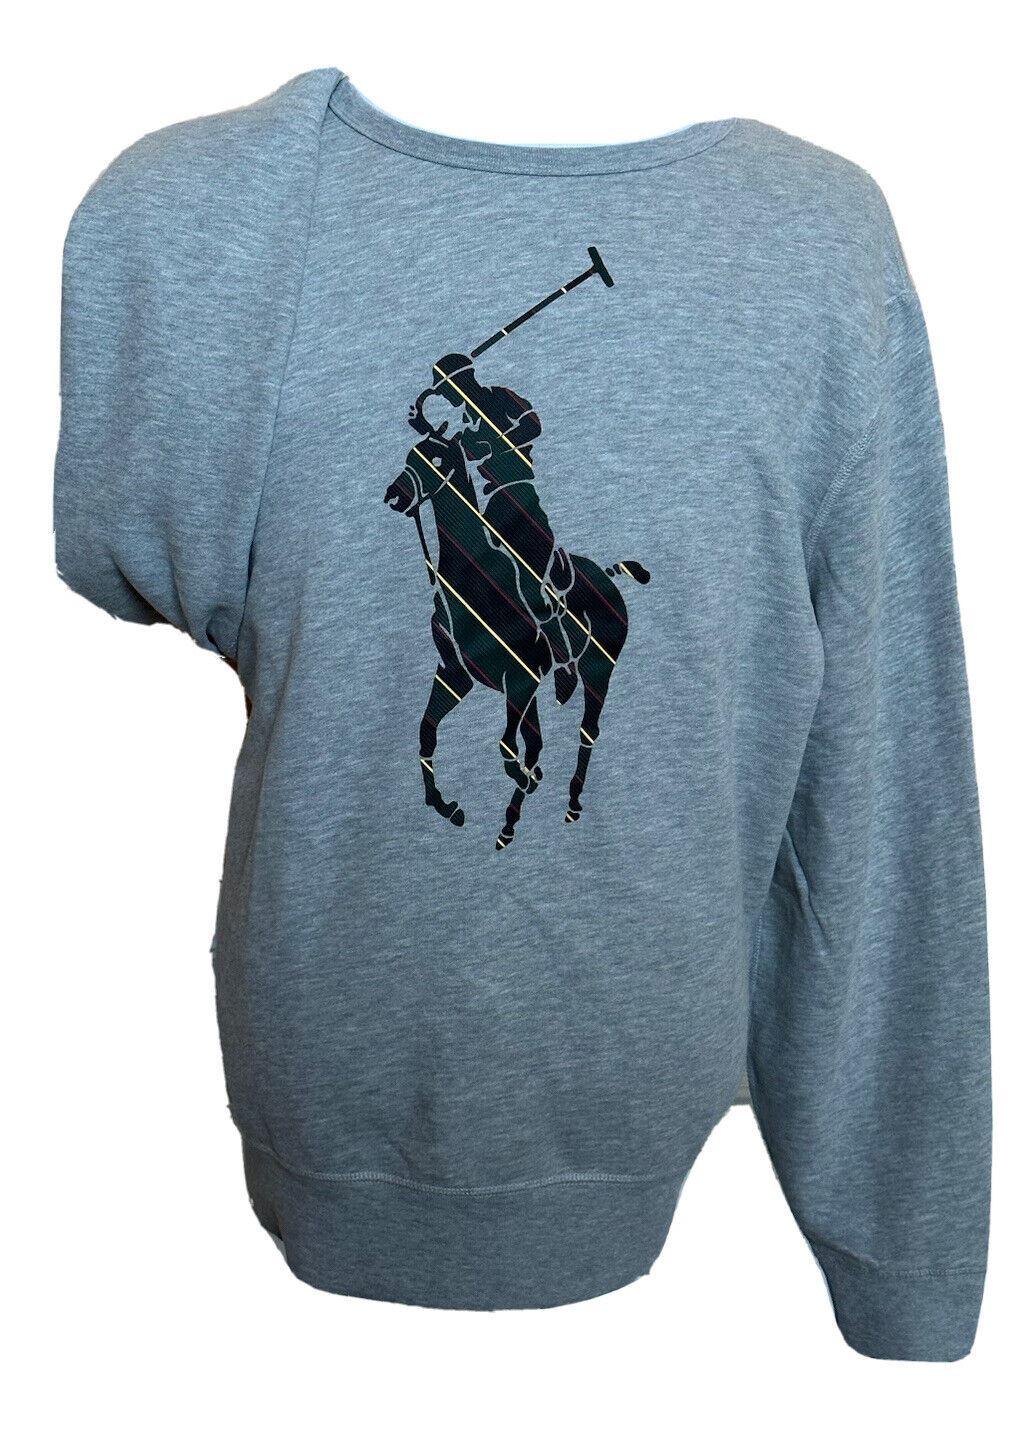 Neu mit Etikett: 138 $ Polo Ralph Lauren Polo-Logo-Fleece-Sweatshirt Grau XL/TG 